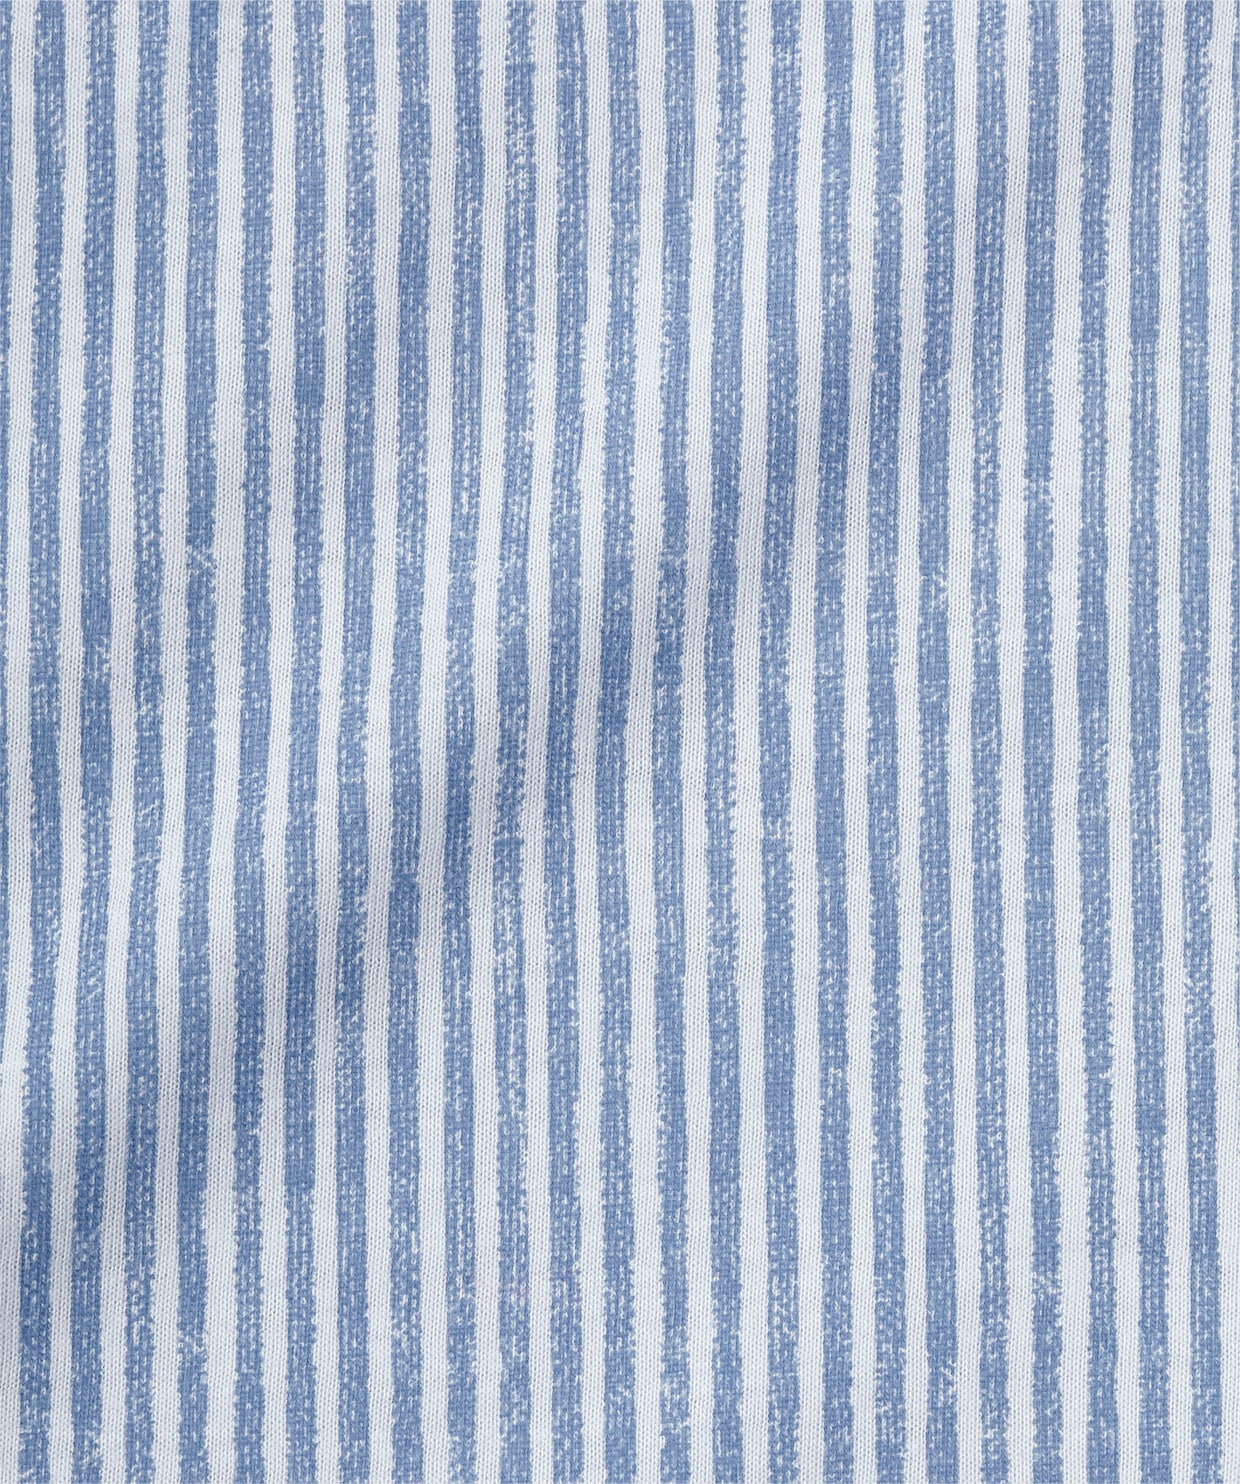 Arabella Slaapshirts - heide gestreept + blauw gestreept